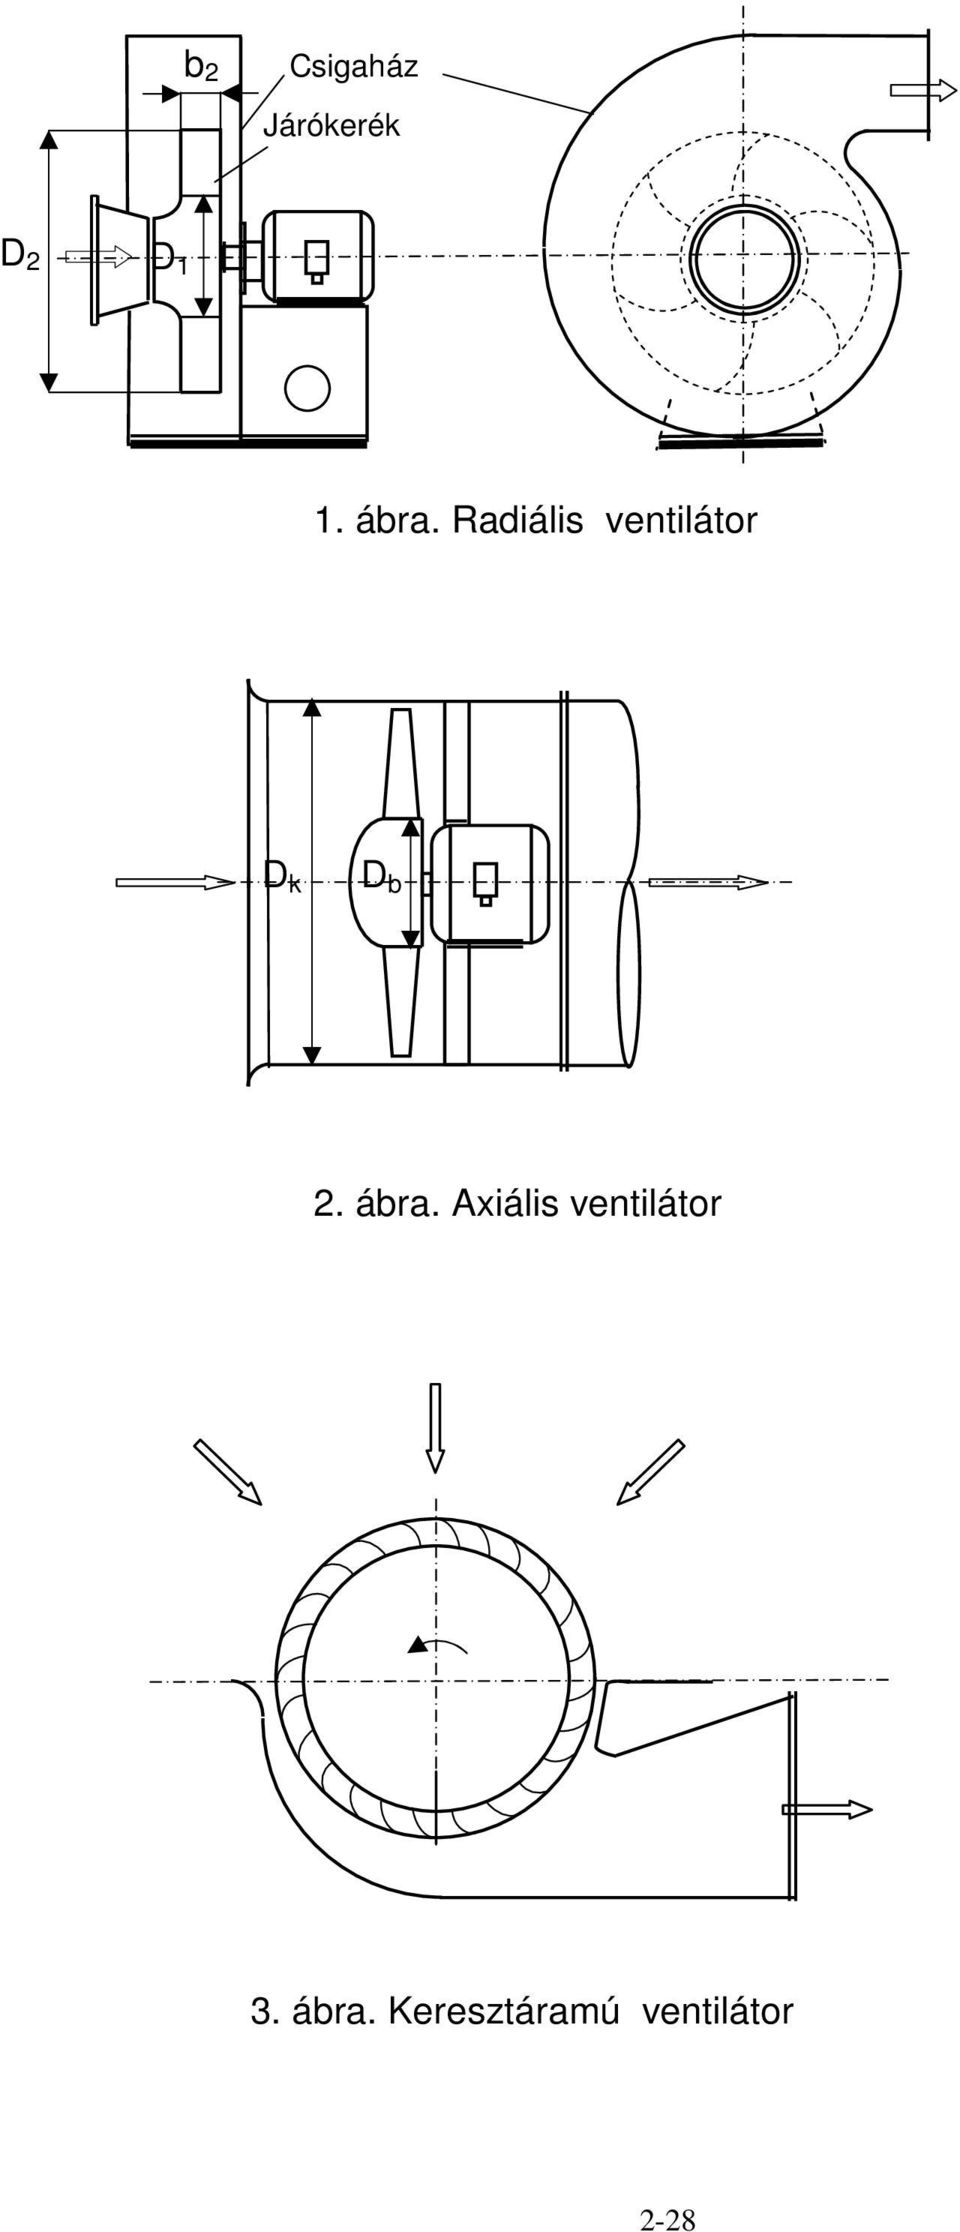 b. ábra. Axiális ventilátor 3.